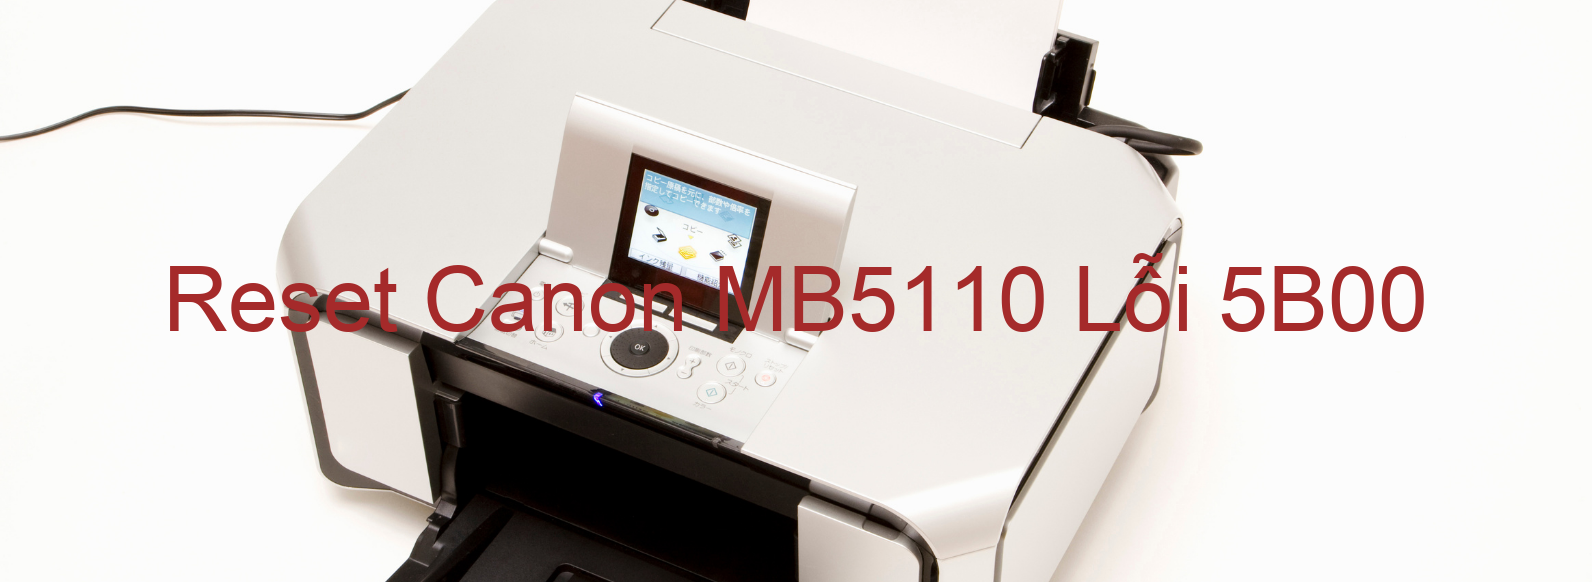 Reset Canon MB5110 Lỗi 5B00